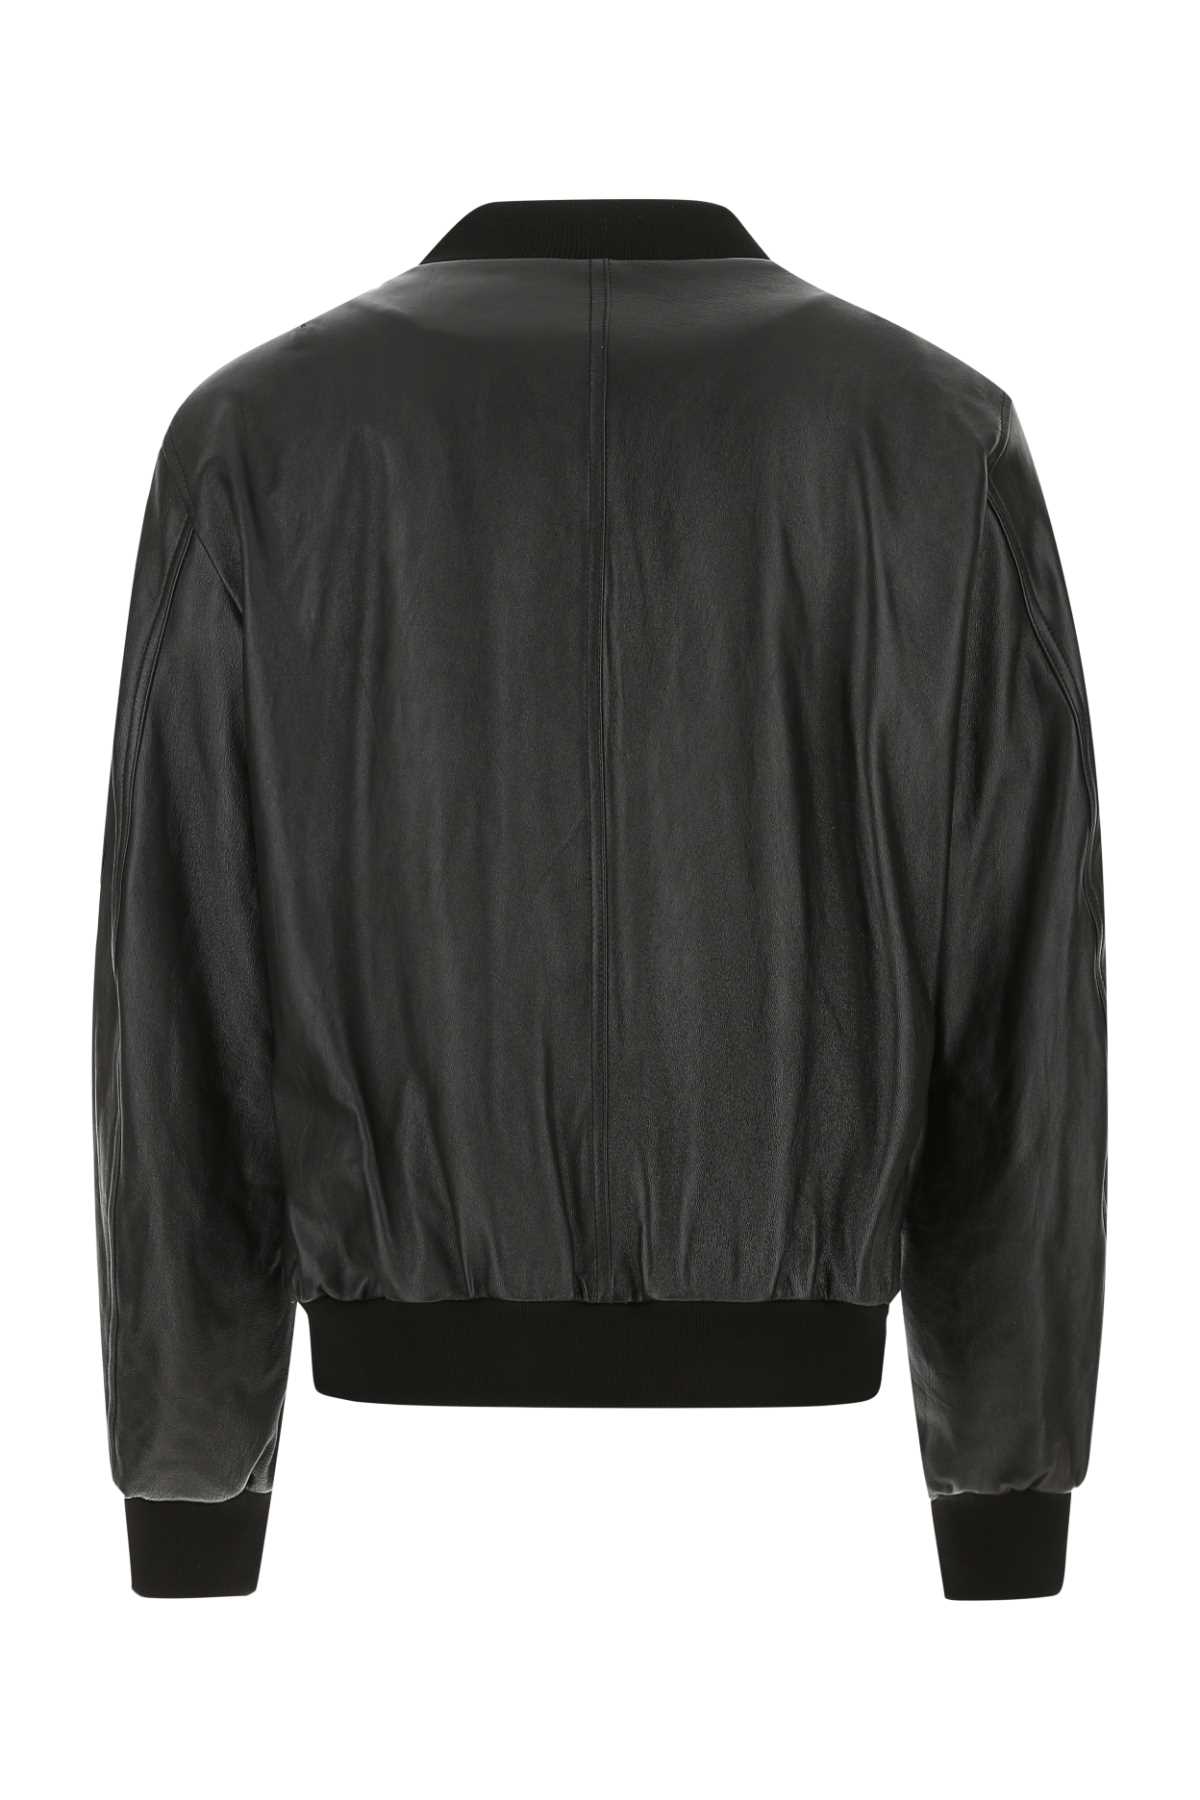 Dolce & Gabbana Black Leather Jacket In N0000